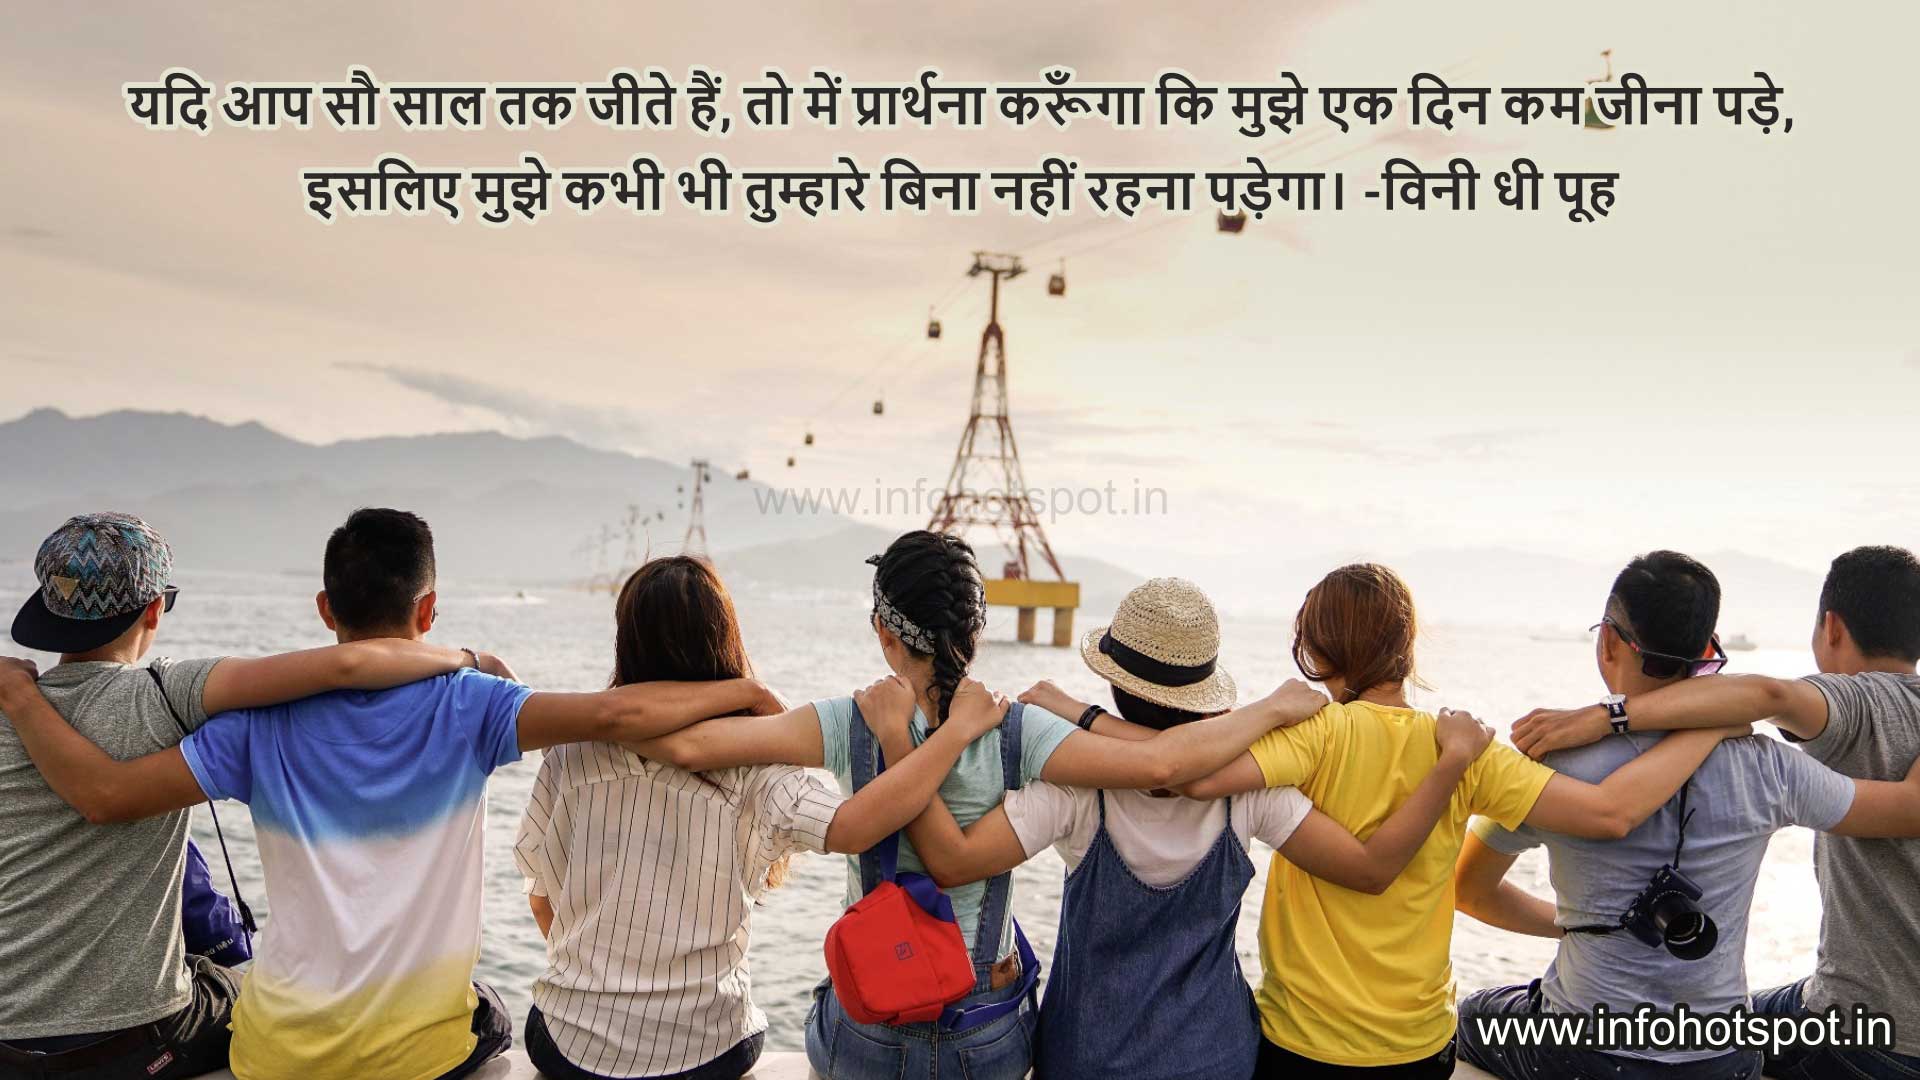 Friendship-Quotes-1-Hindi